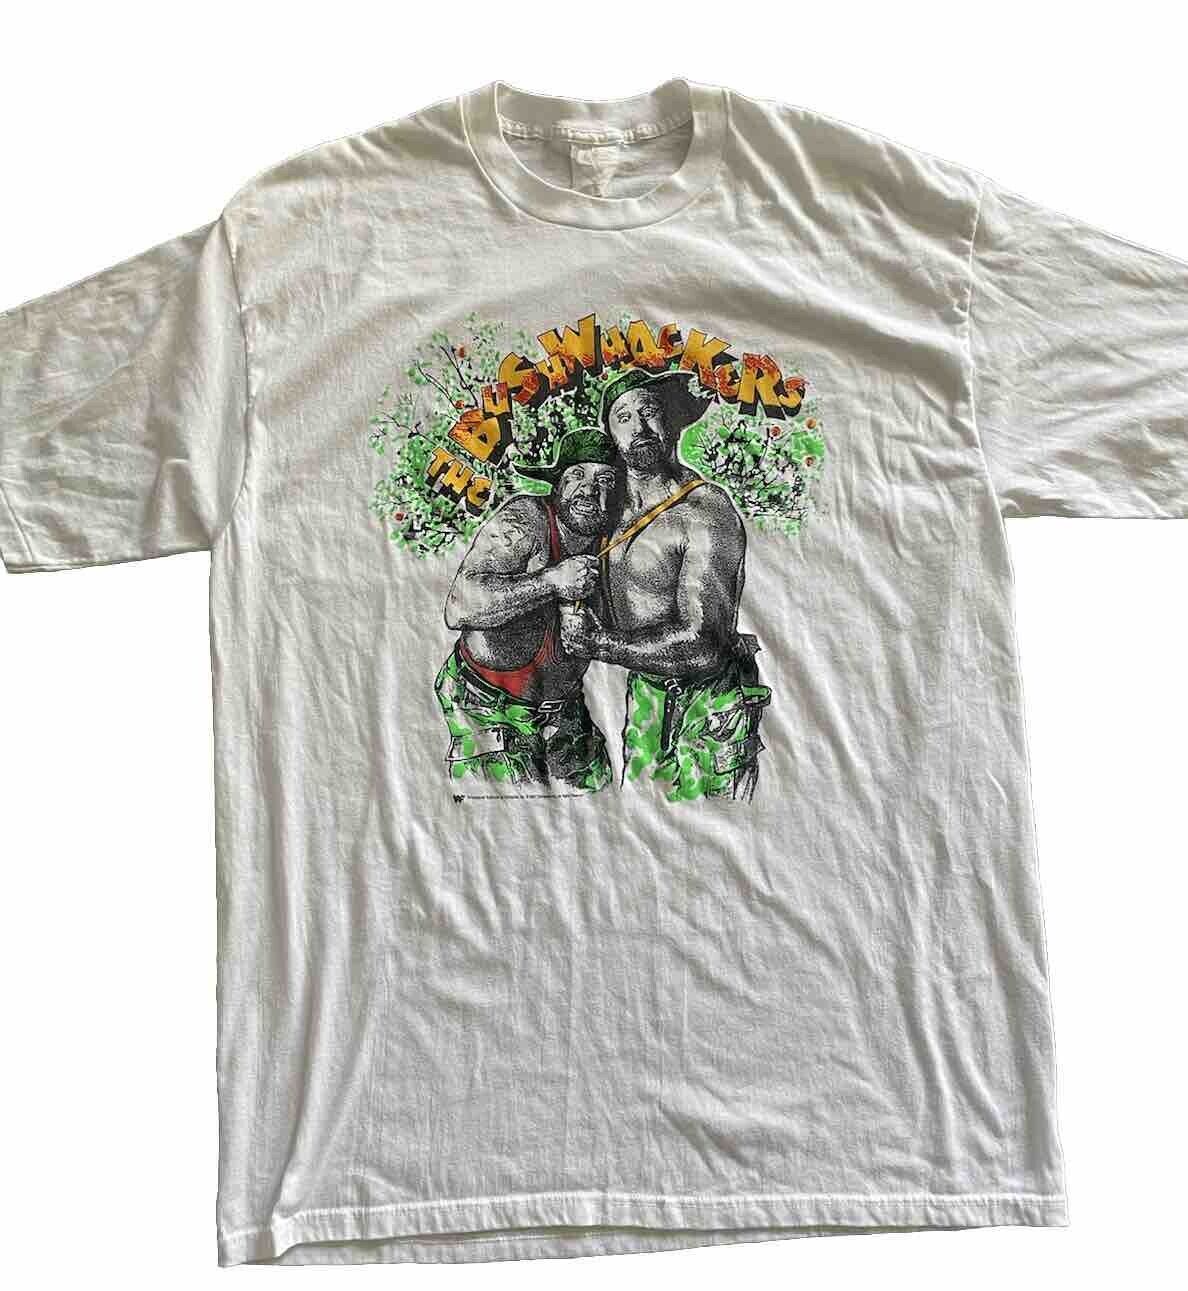 RARE Vintage 90s 1990 WWF The Bushwhackers Wrestling Shirt